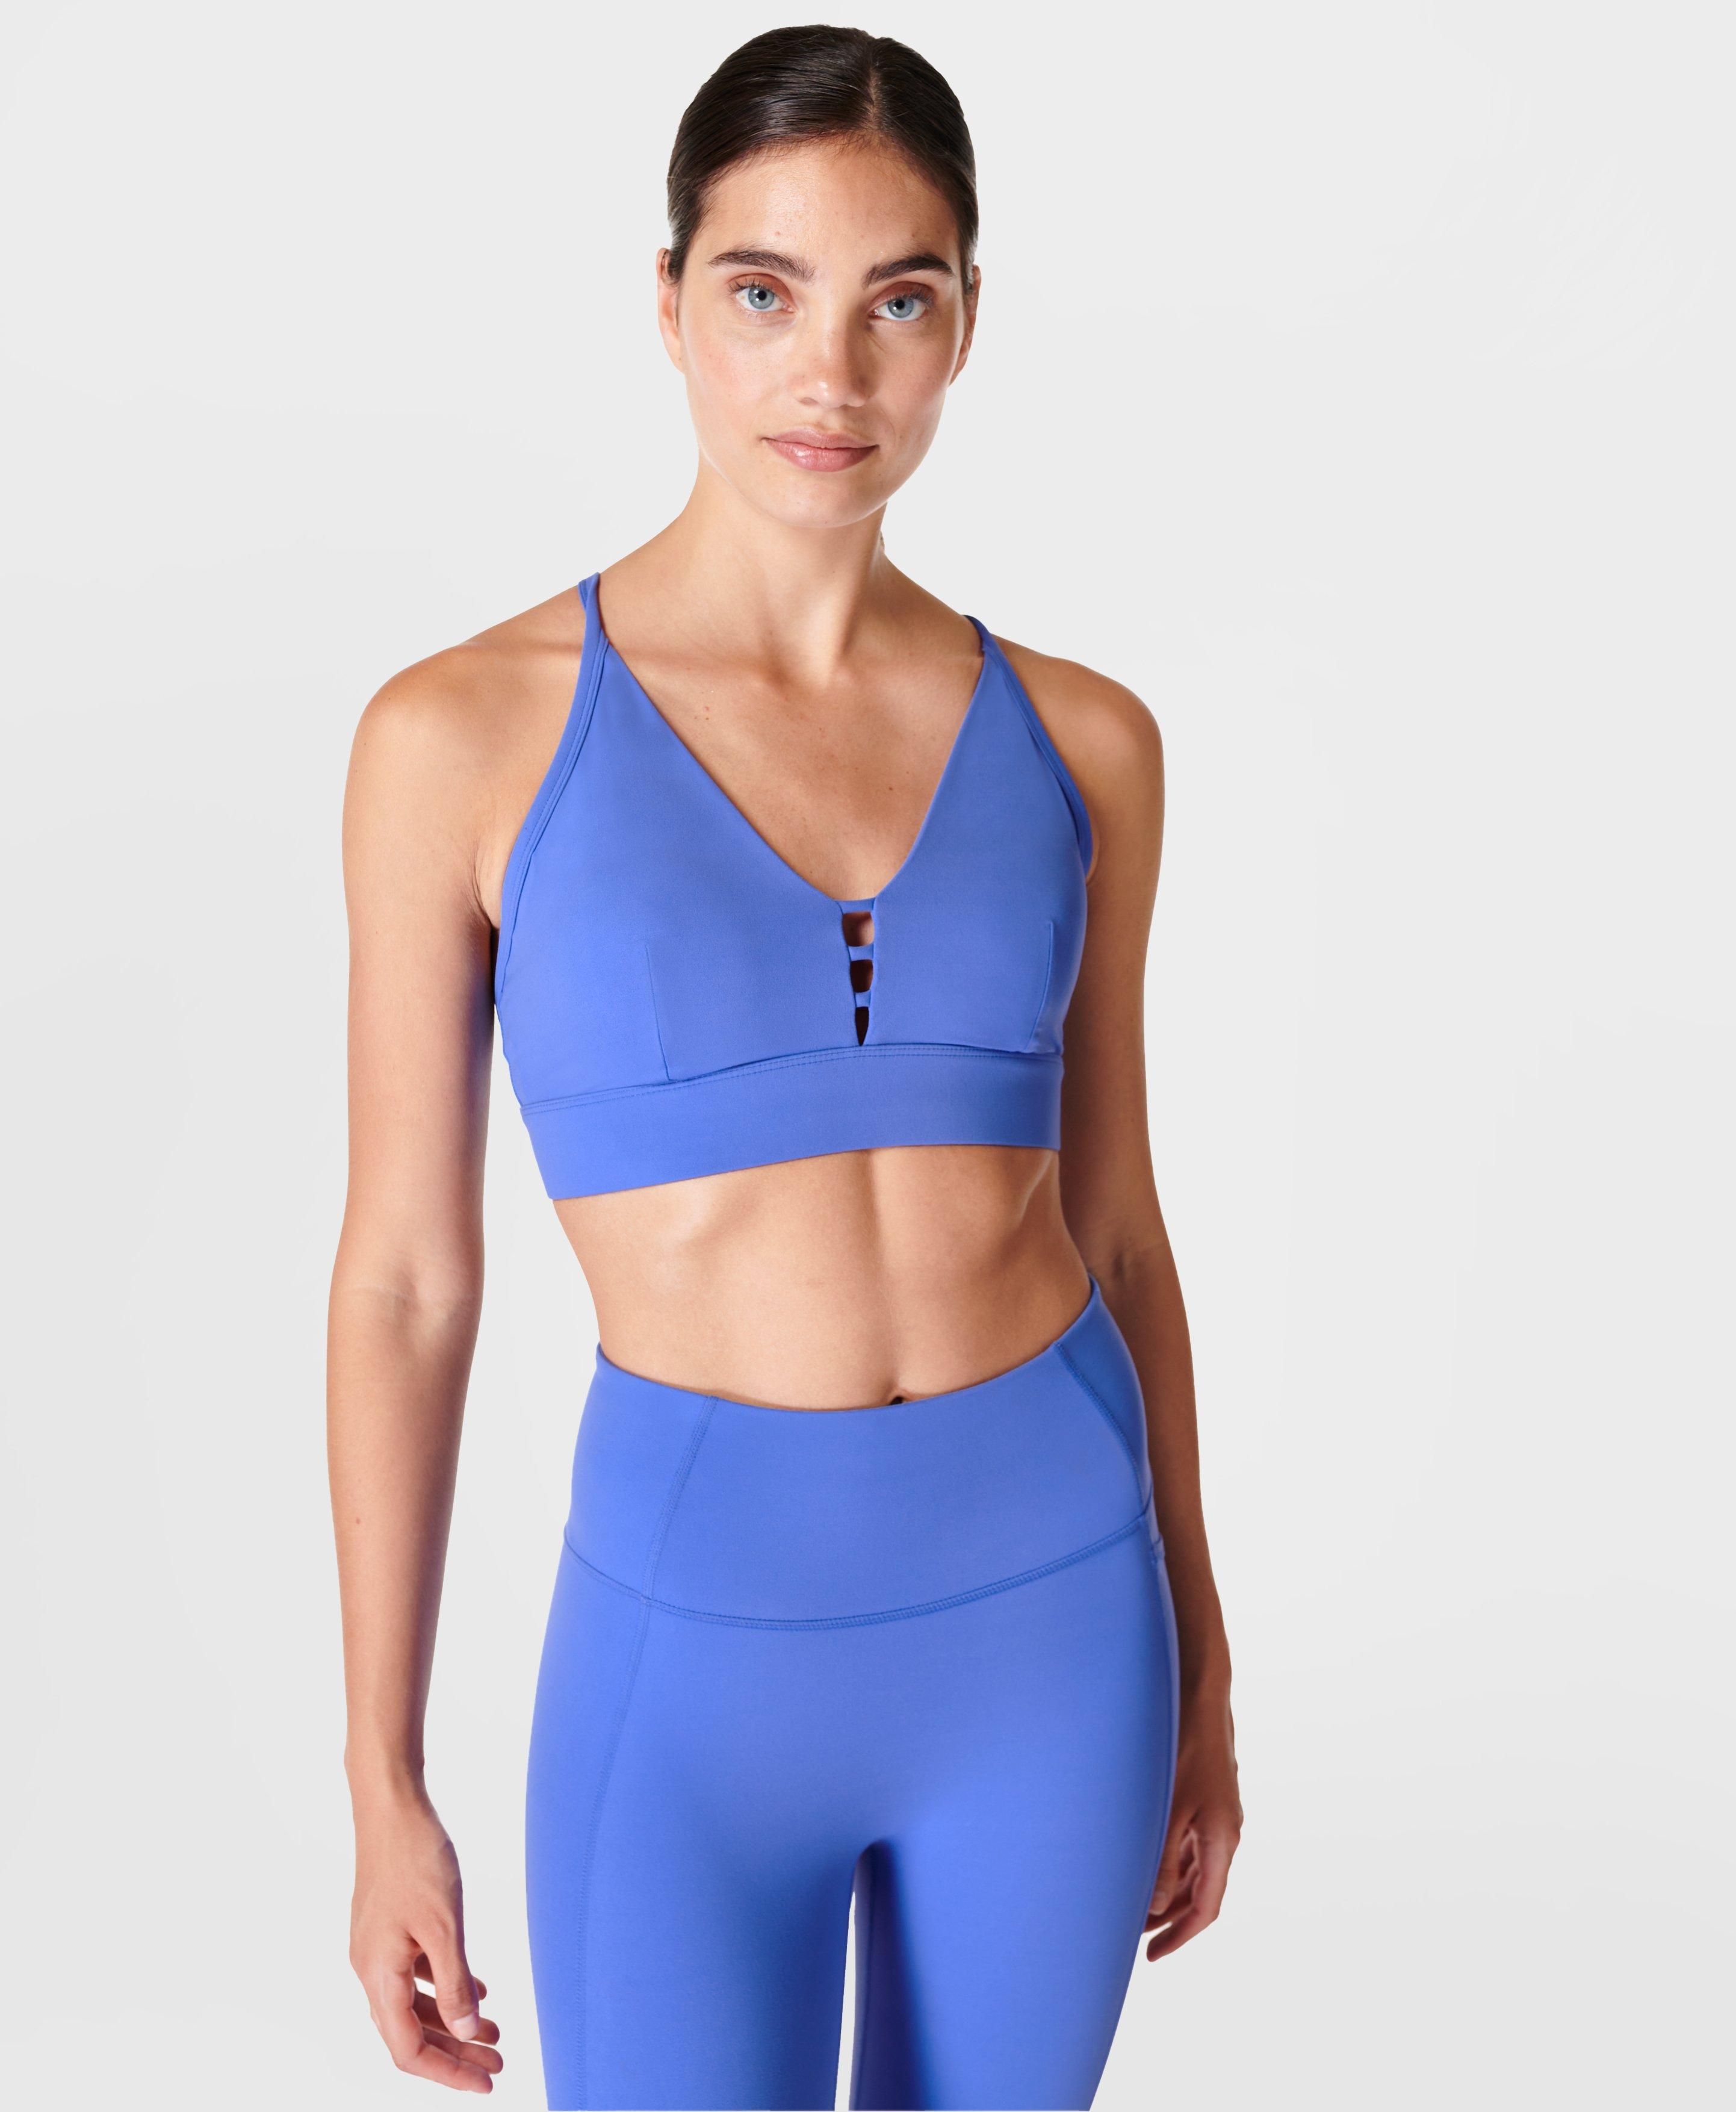 Super Soft Strappy Back Bra Color Theory - Calm Blue, Women's Sports Bras